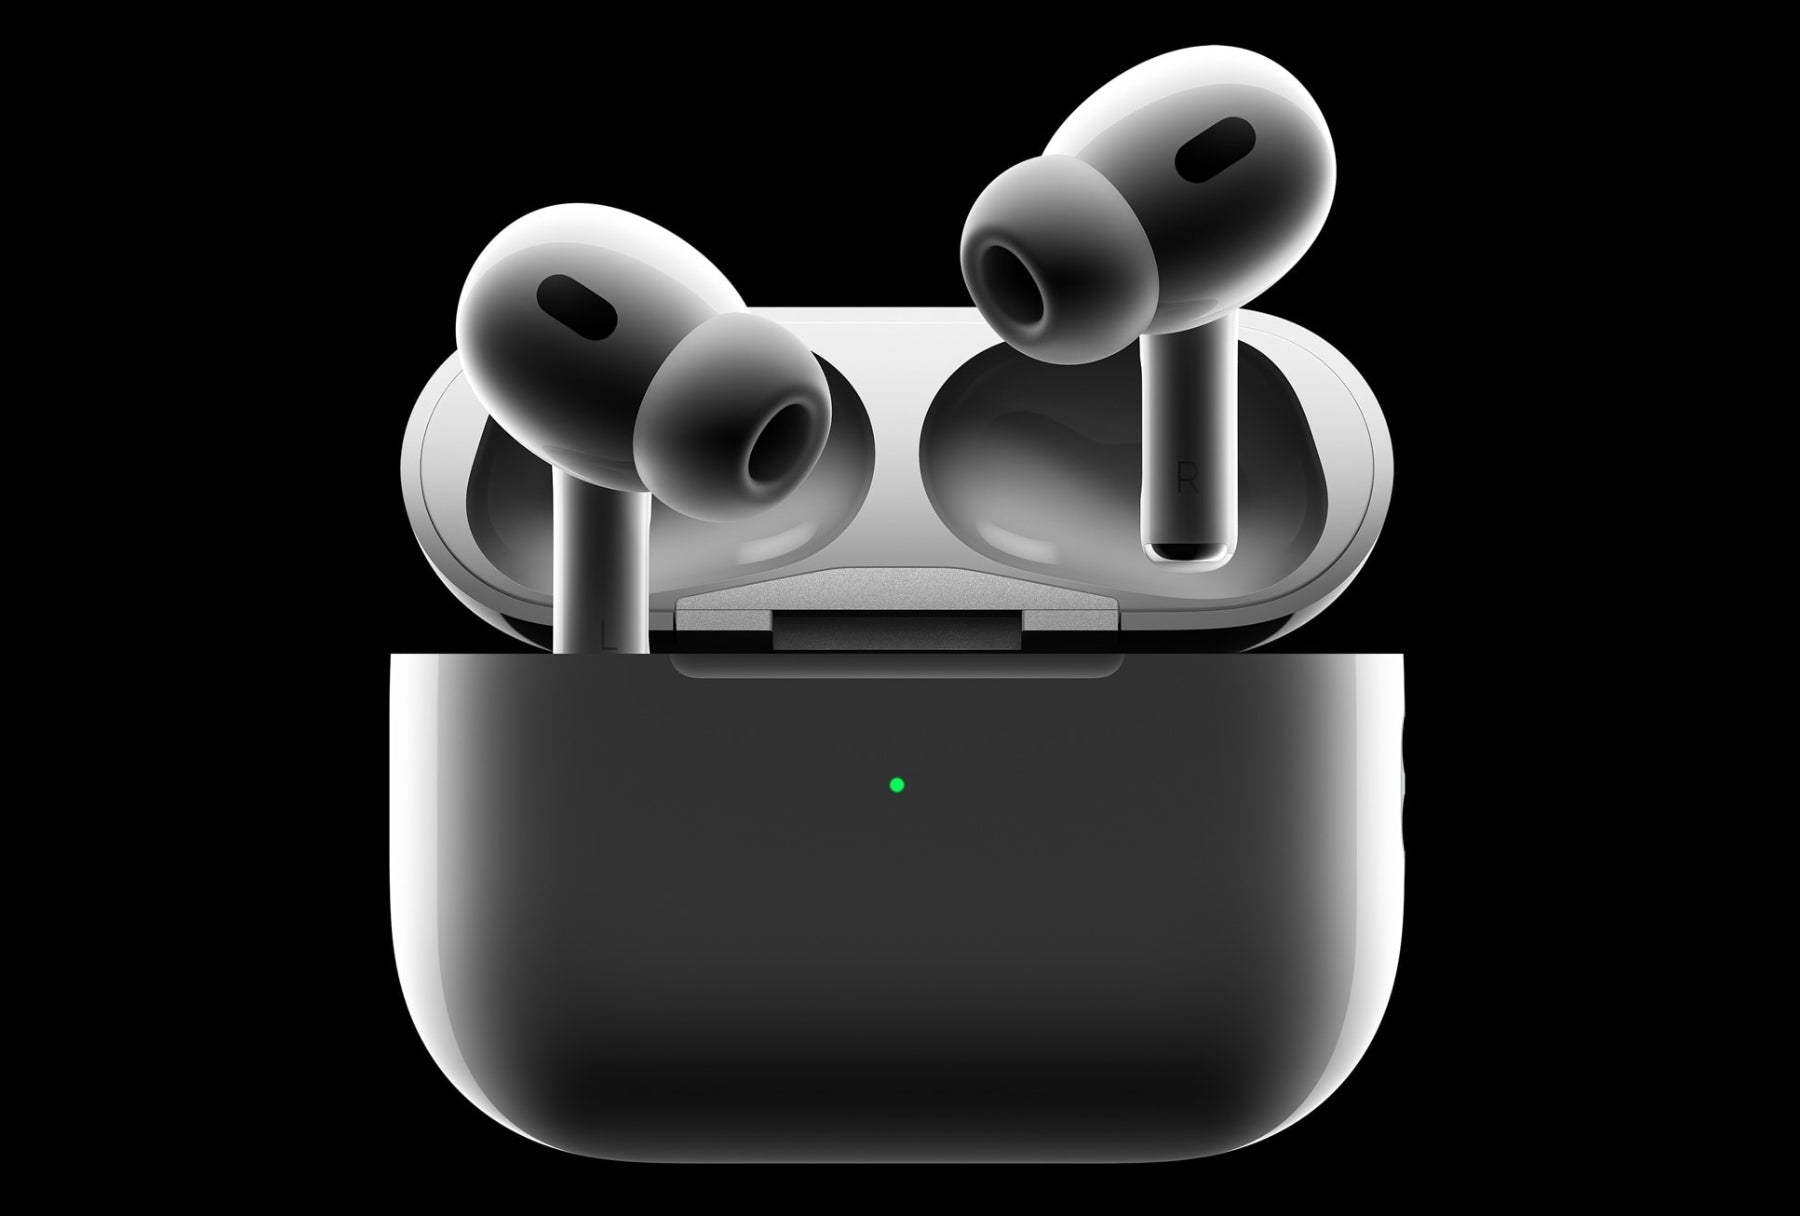 Apple AirPods (3.ª generación) - AT&T